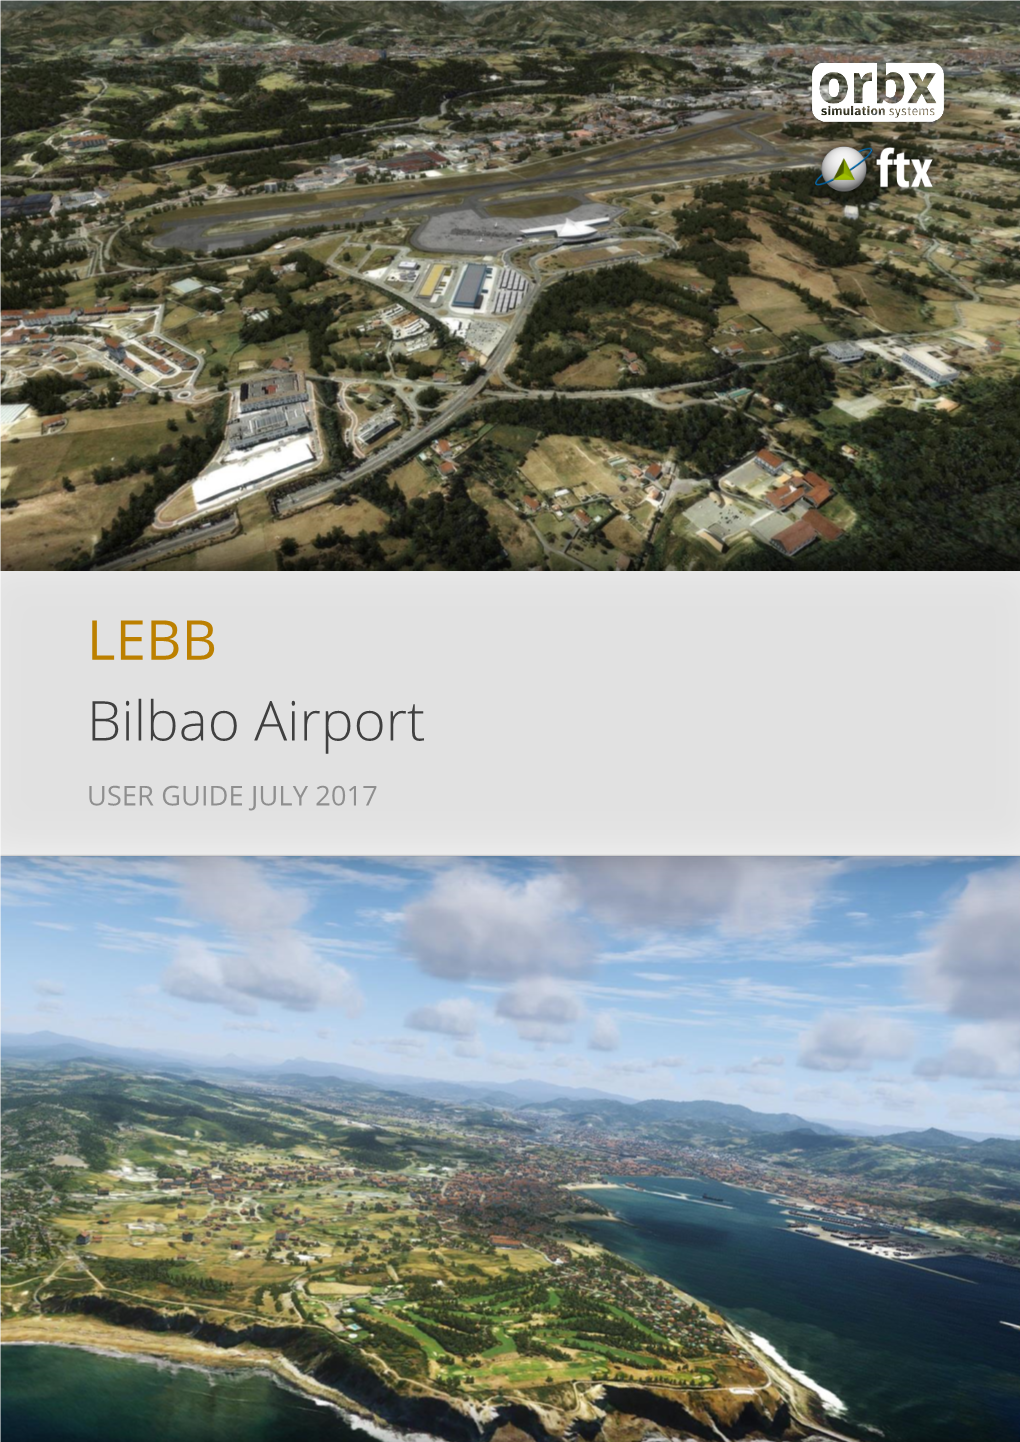 LEBB Bilbao Airport